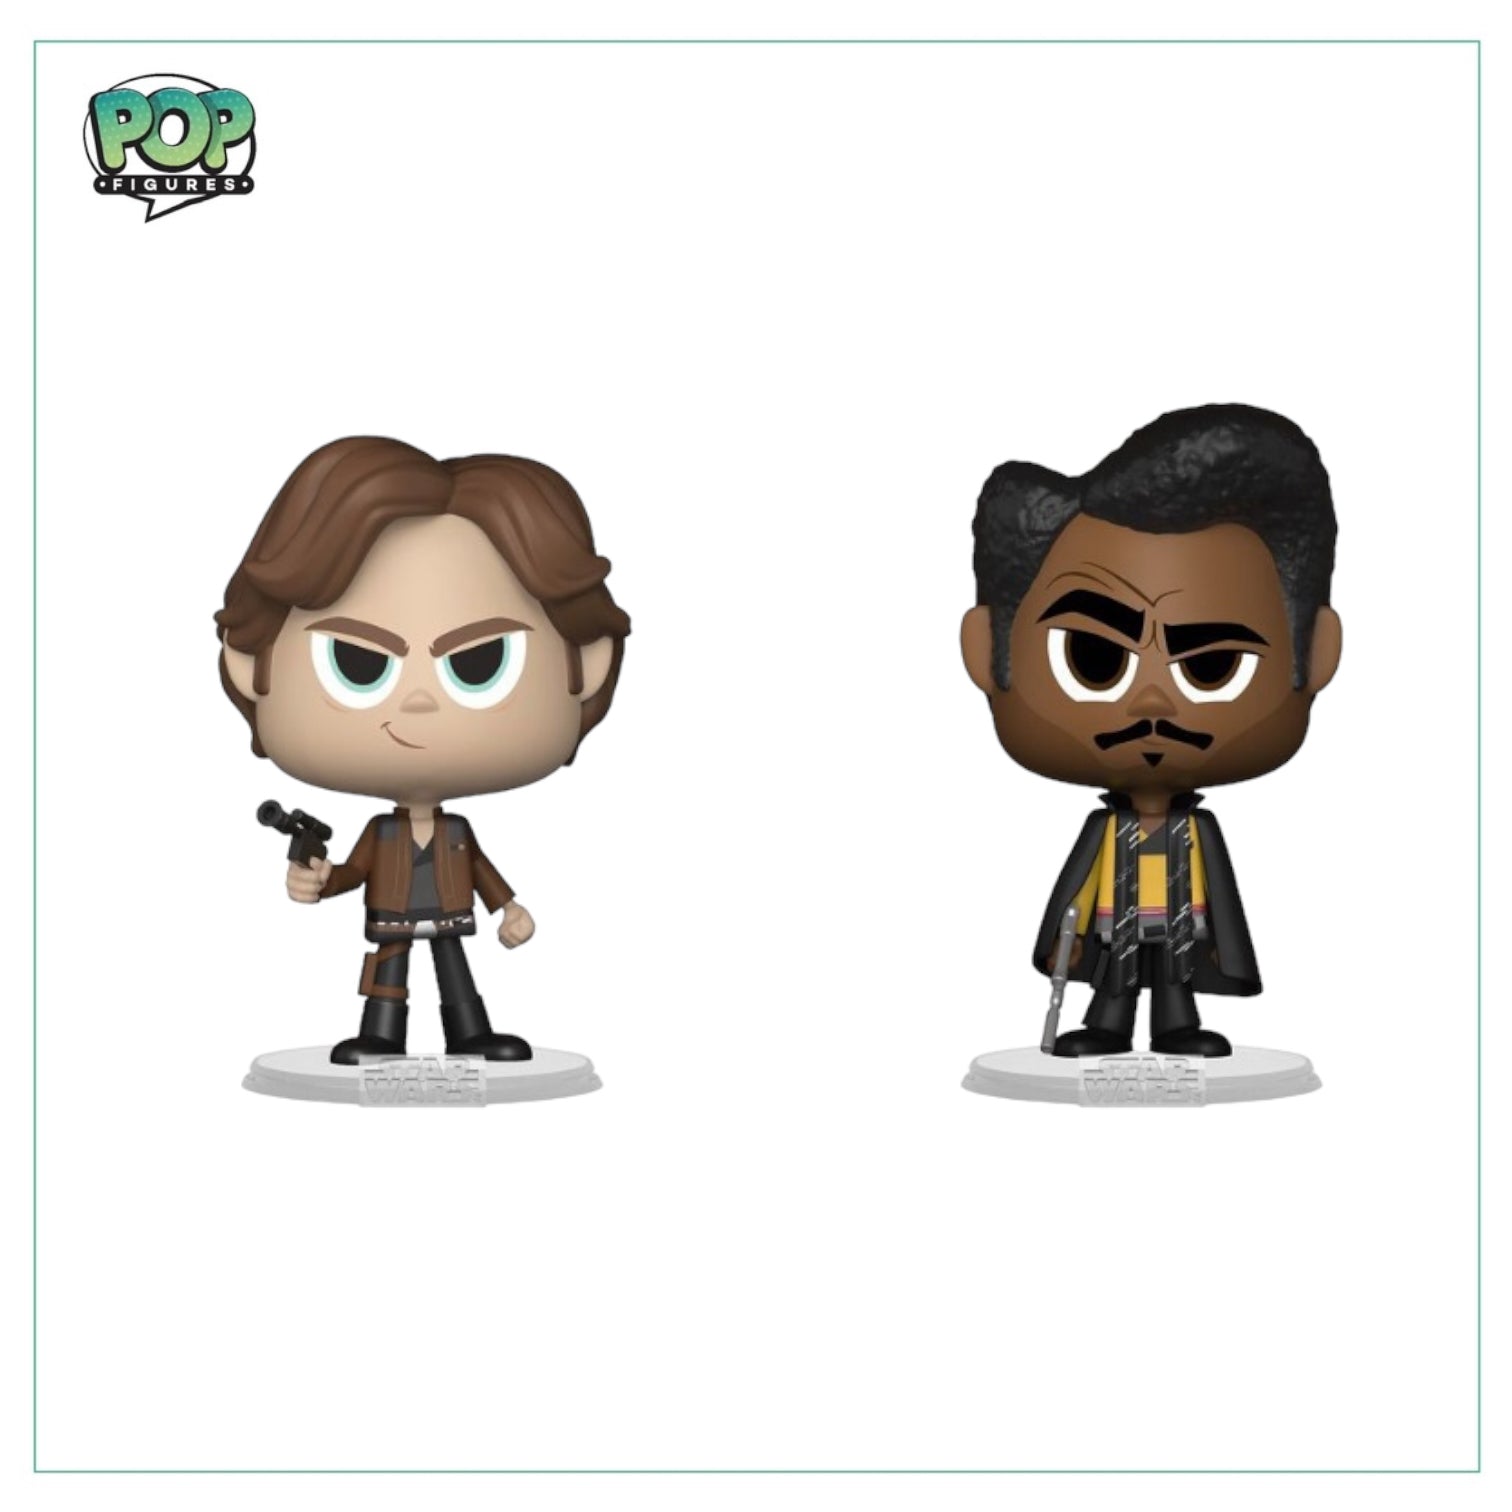 Han Solo and Lando Calrissian Funko Vynl. -  Star Wars